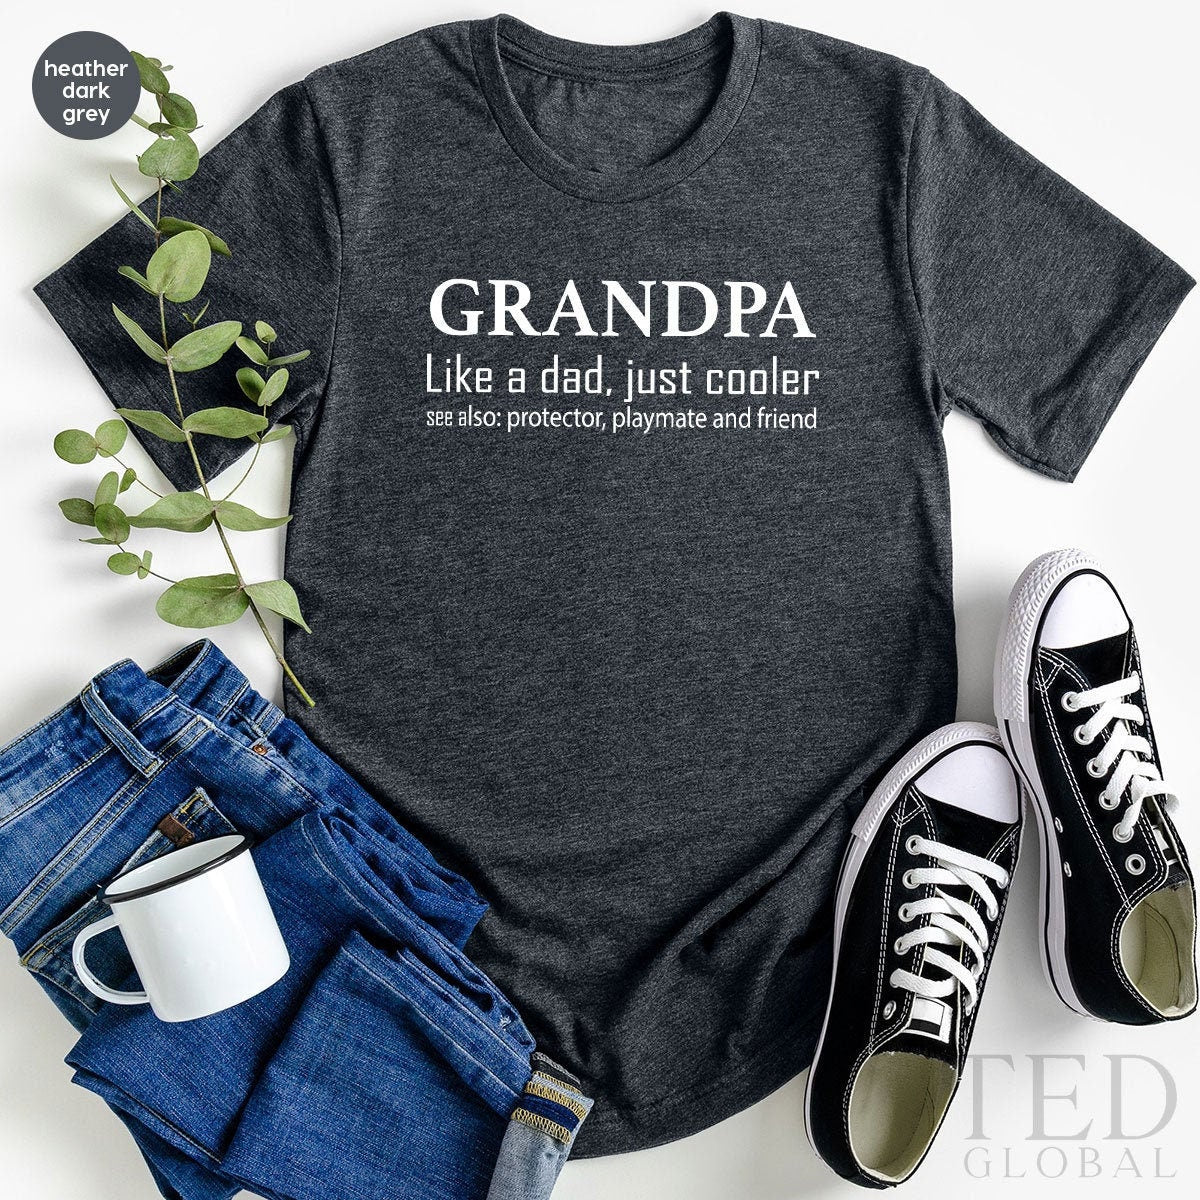 Best Grandpa Shirt, Custom Name T Shirt, Personalized T-Shirt